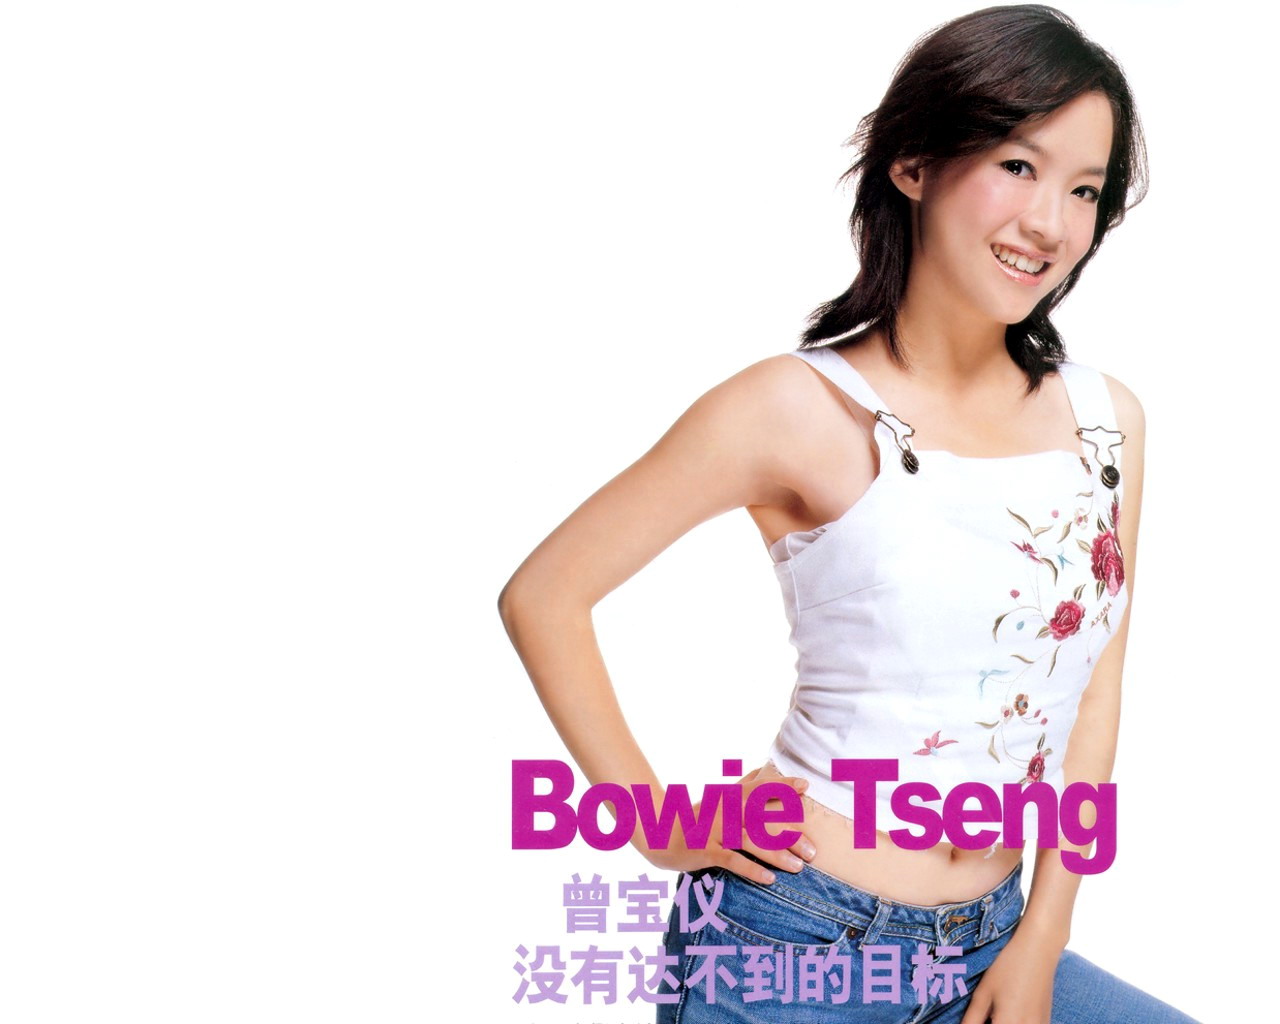 Bowie Tsang